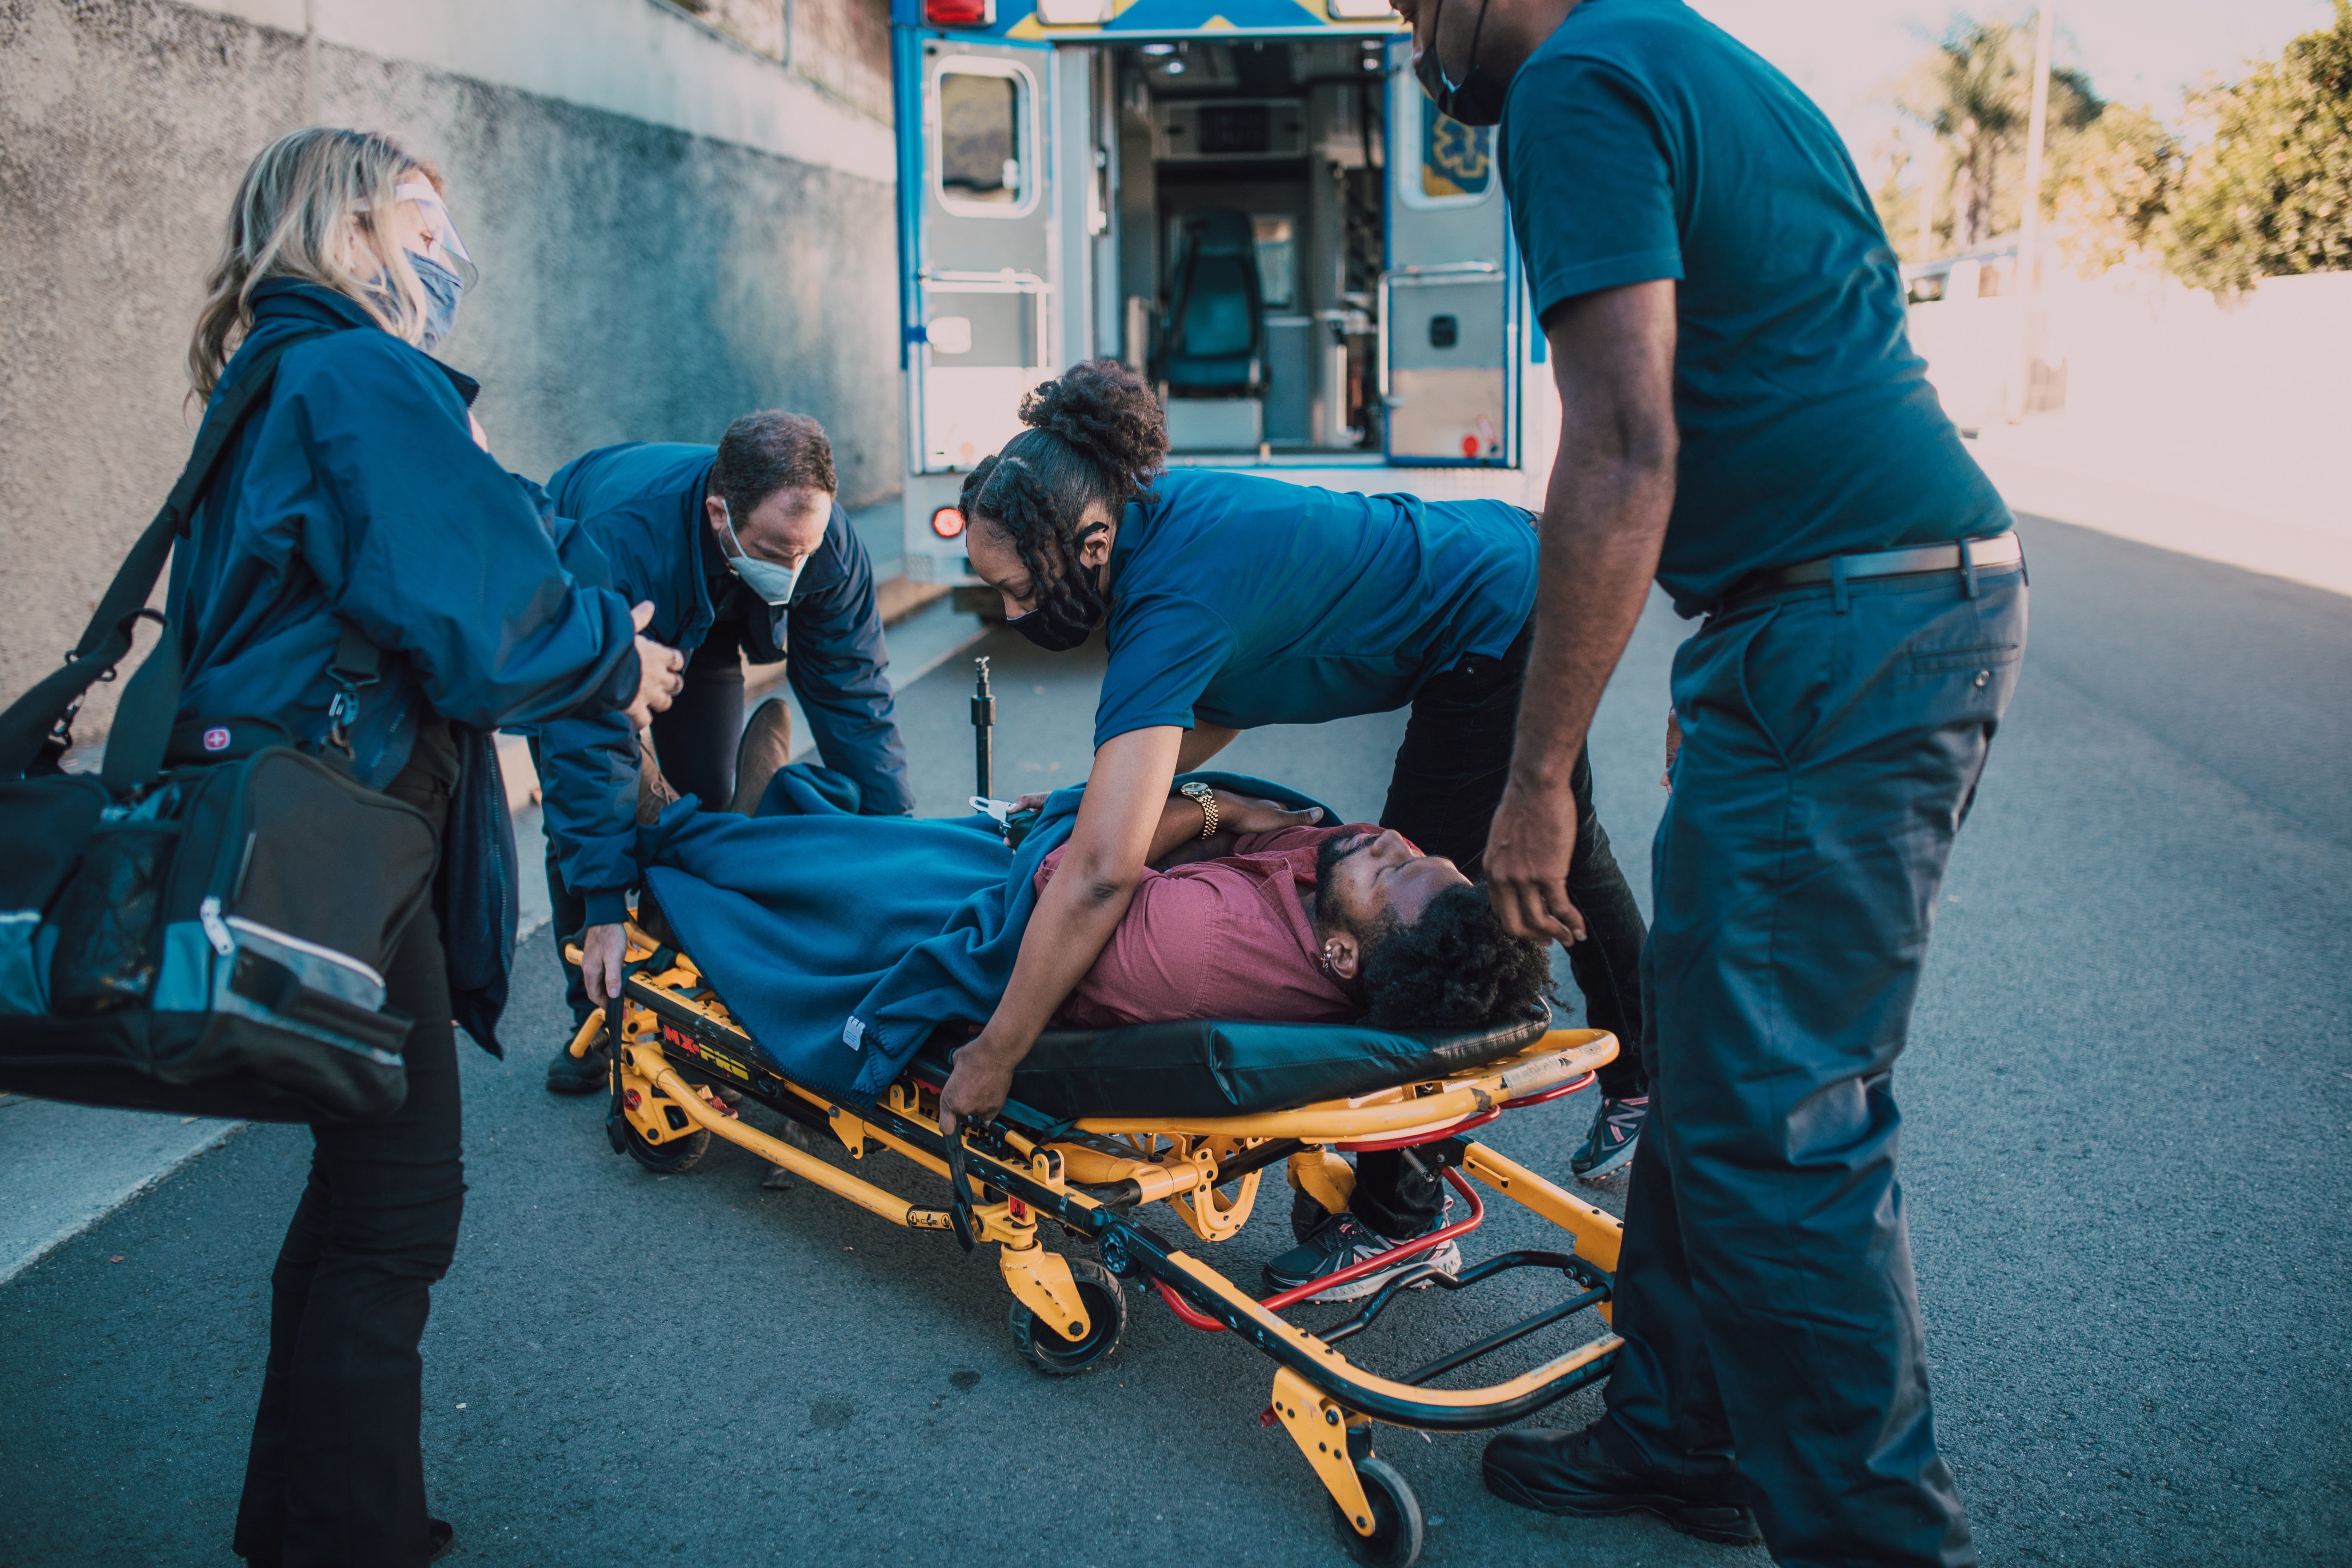 Paramedics answering an emergency call